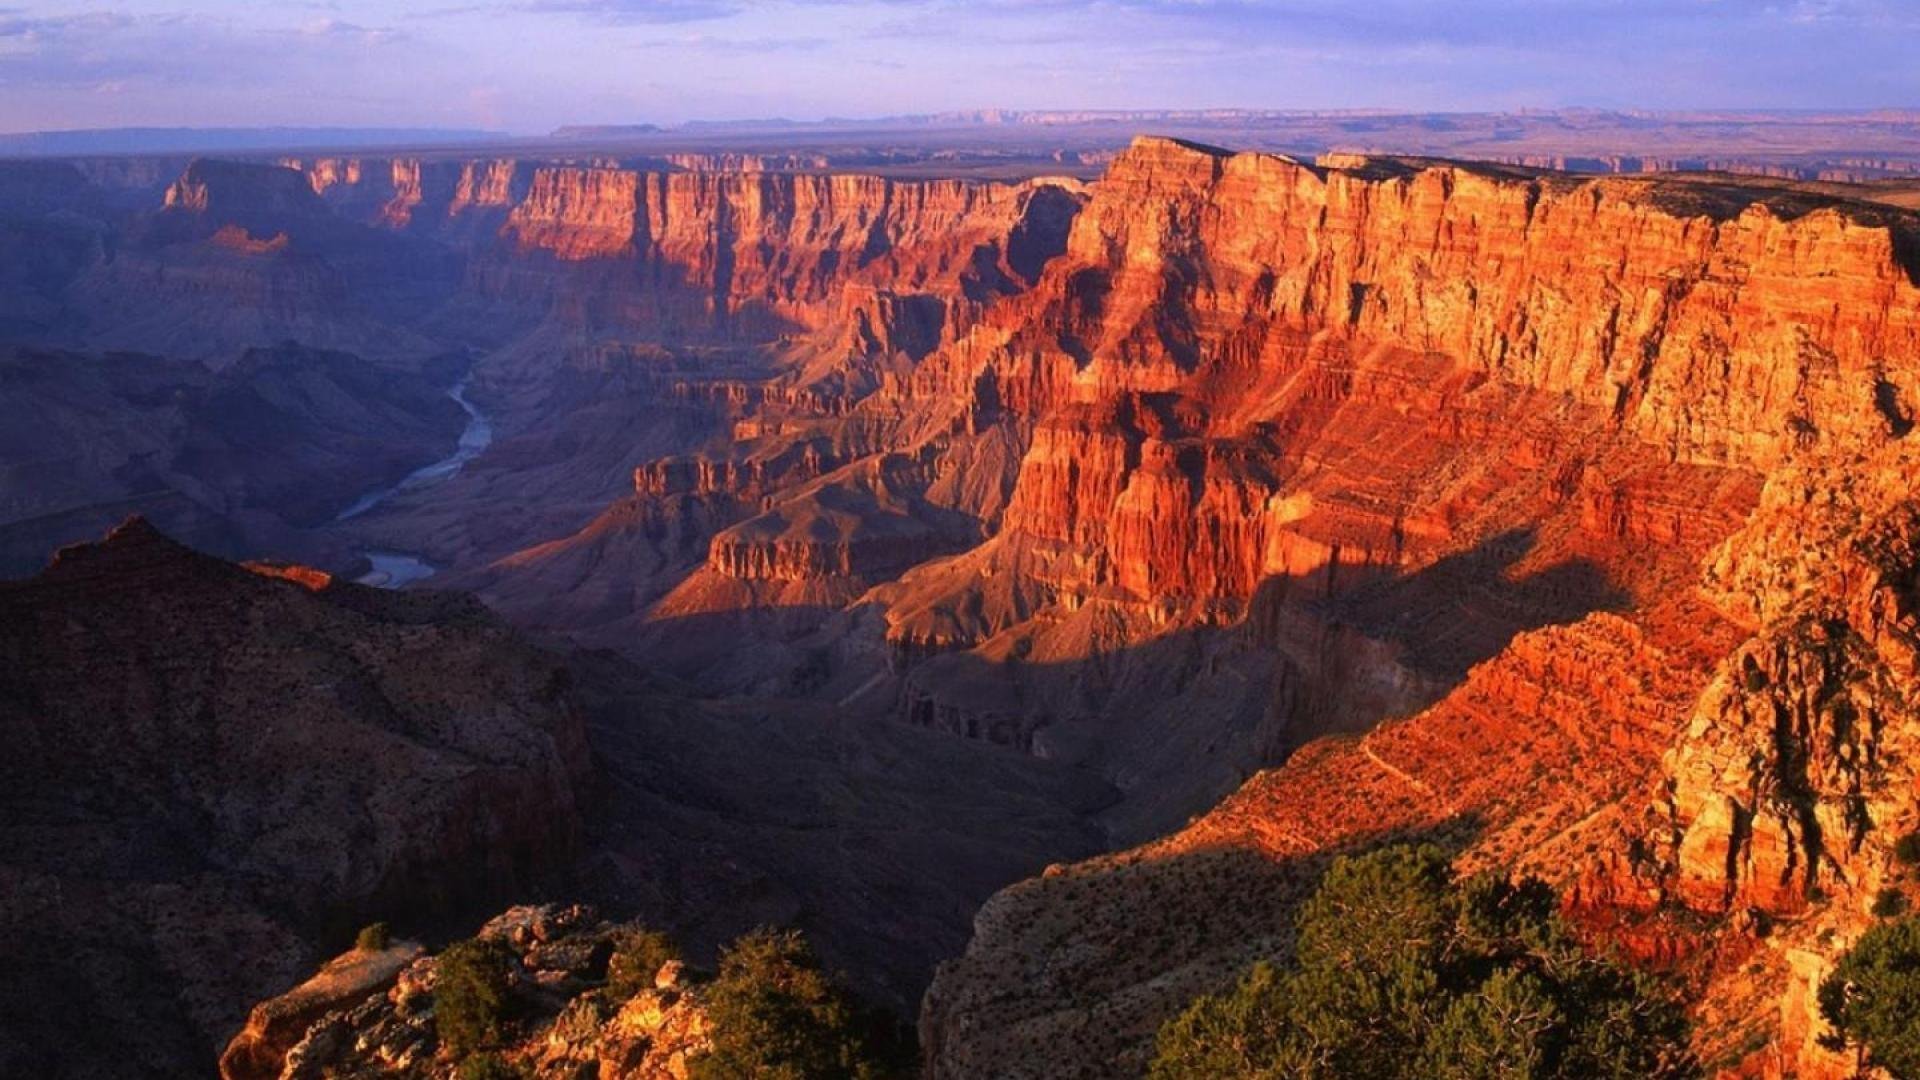 Человек и природа северной америки. Гранд-каньон (Grand Canyon). Северная Америка каньон Колорадо. Гранд каньон Невада. Америка штат Аризона.